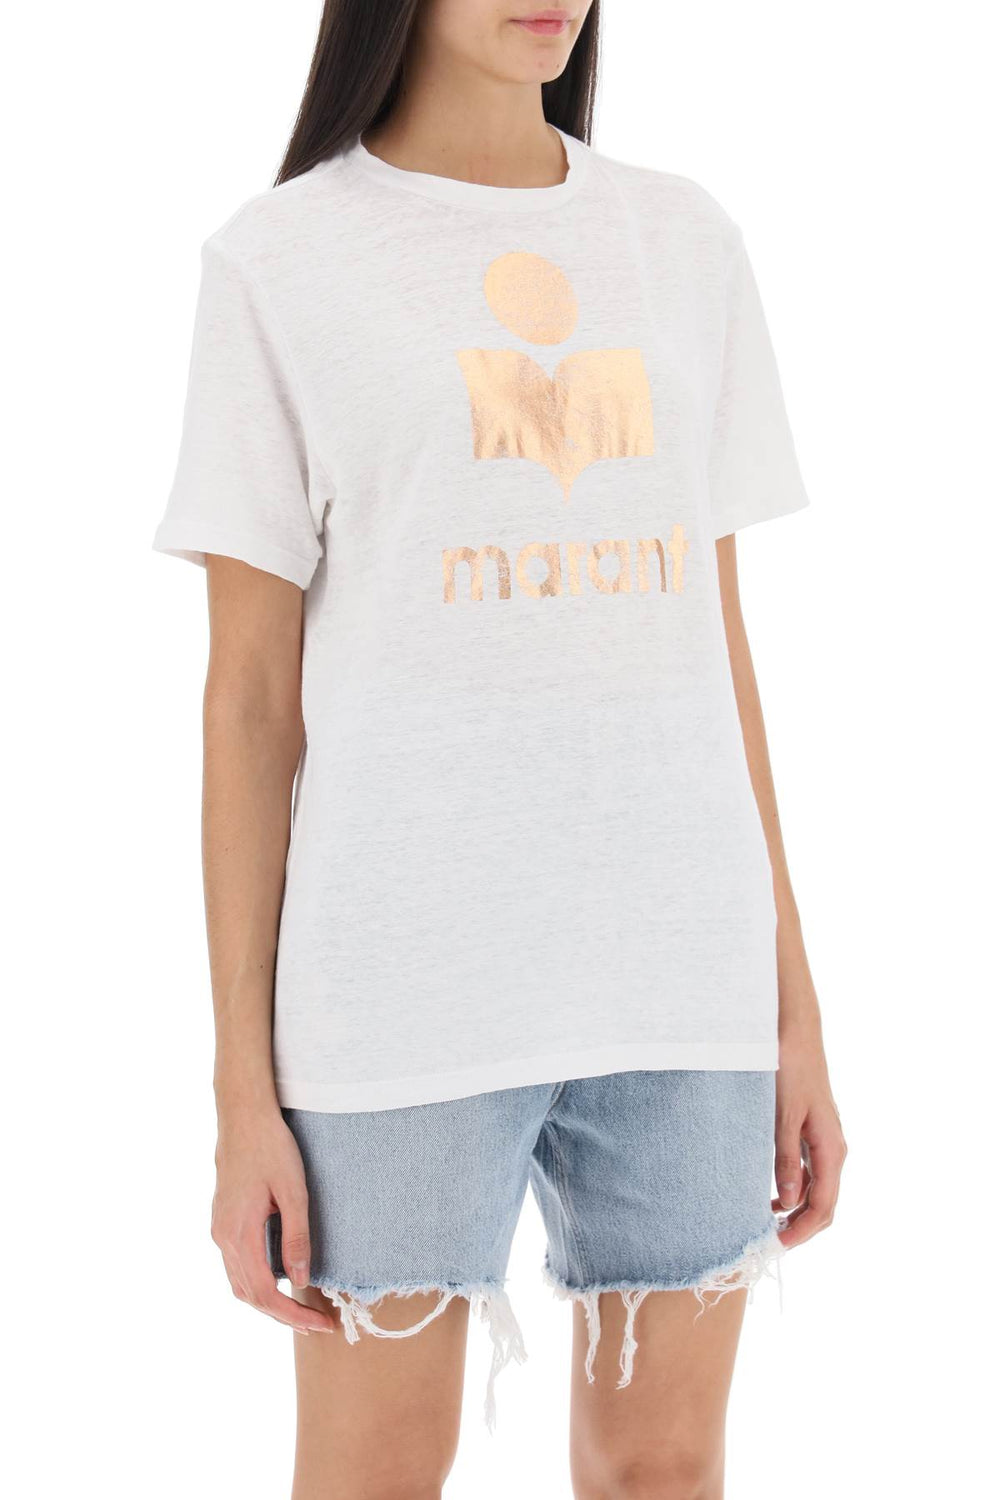 Isabel marant etoile zewel t-shirt with metallic logo print-1